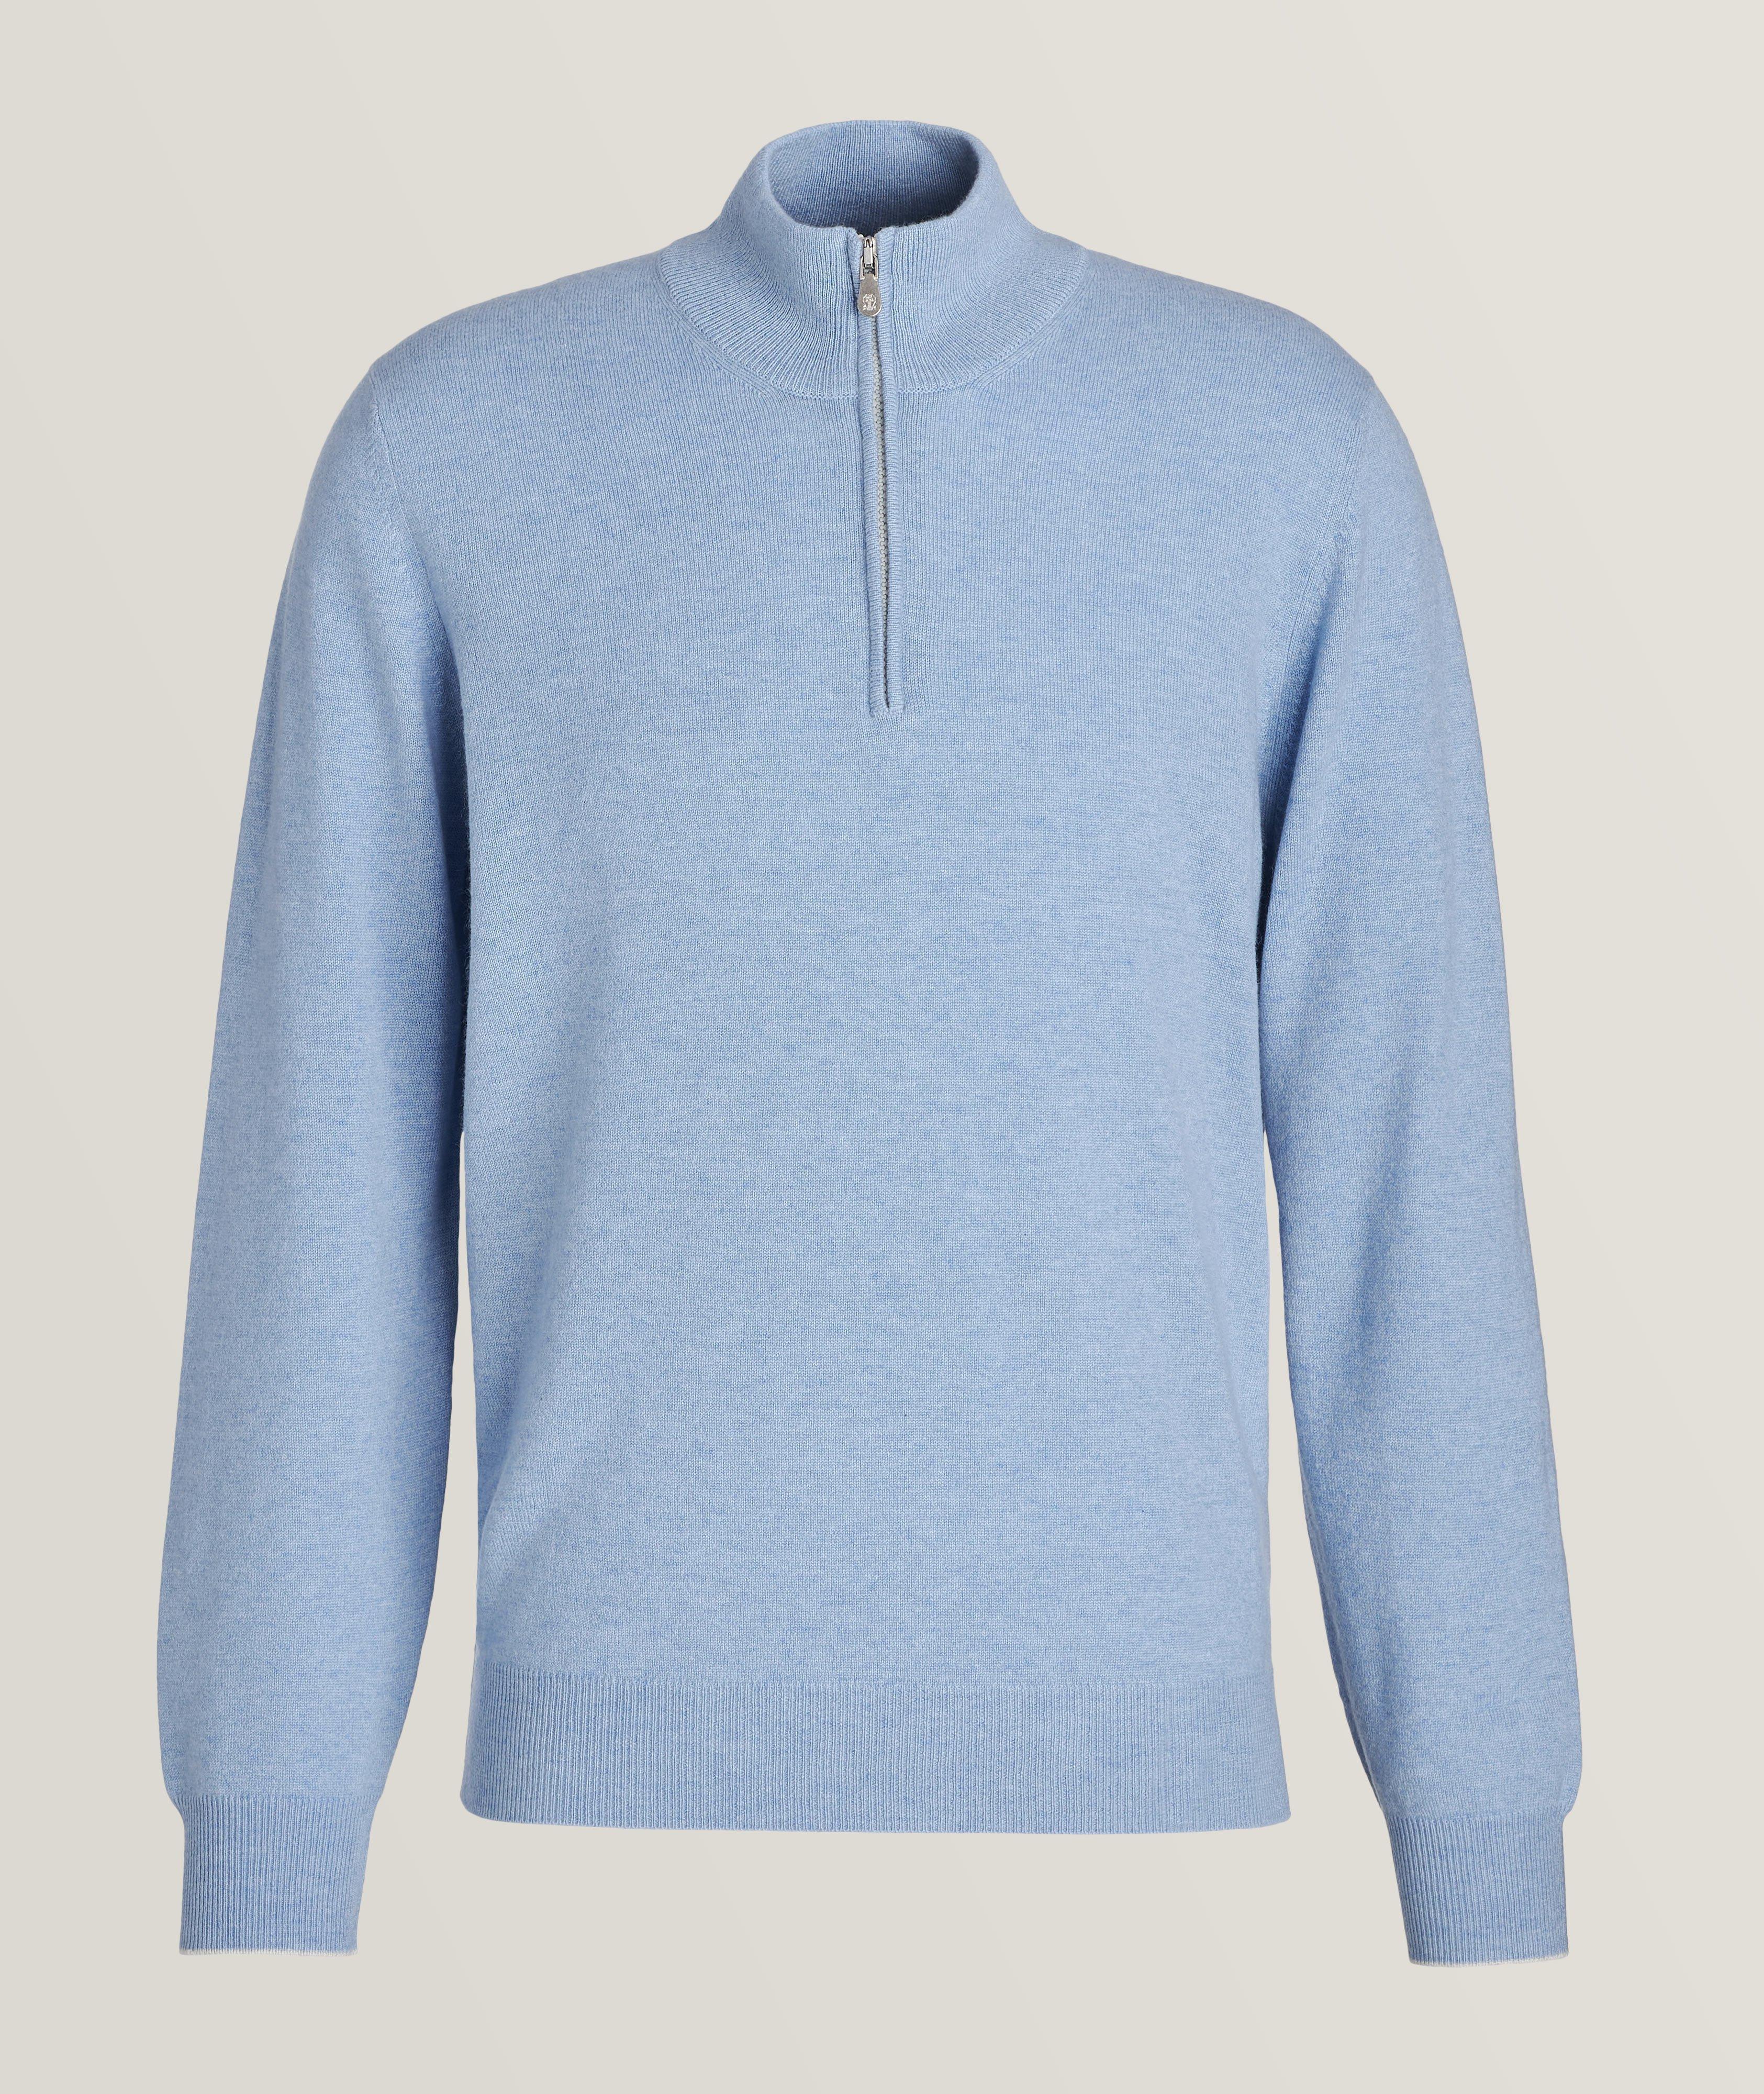 Quarter-Zip Cashmere Sweater image 0